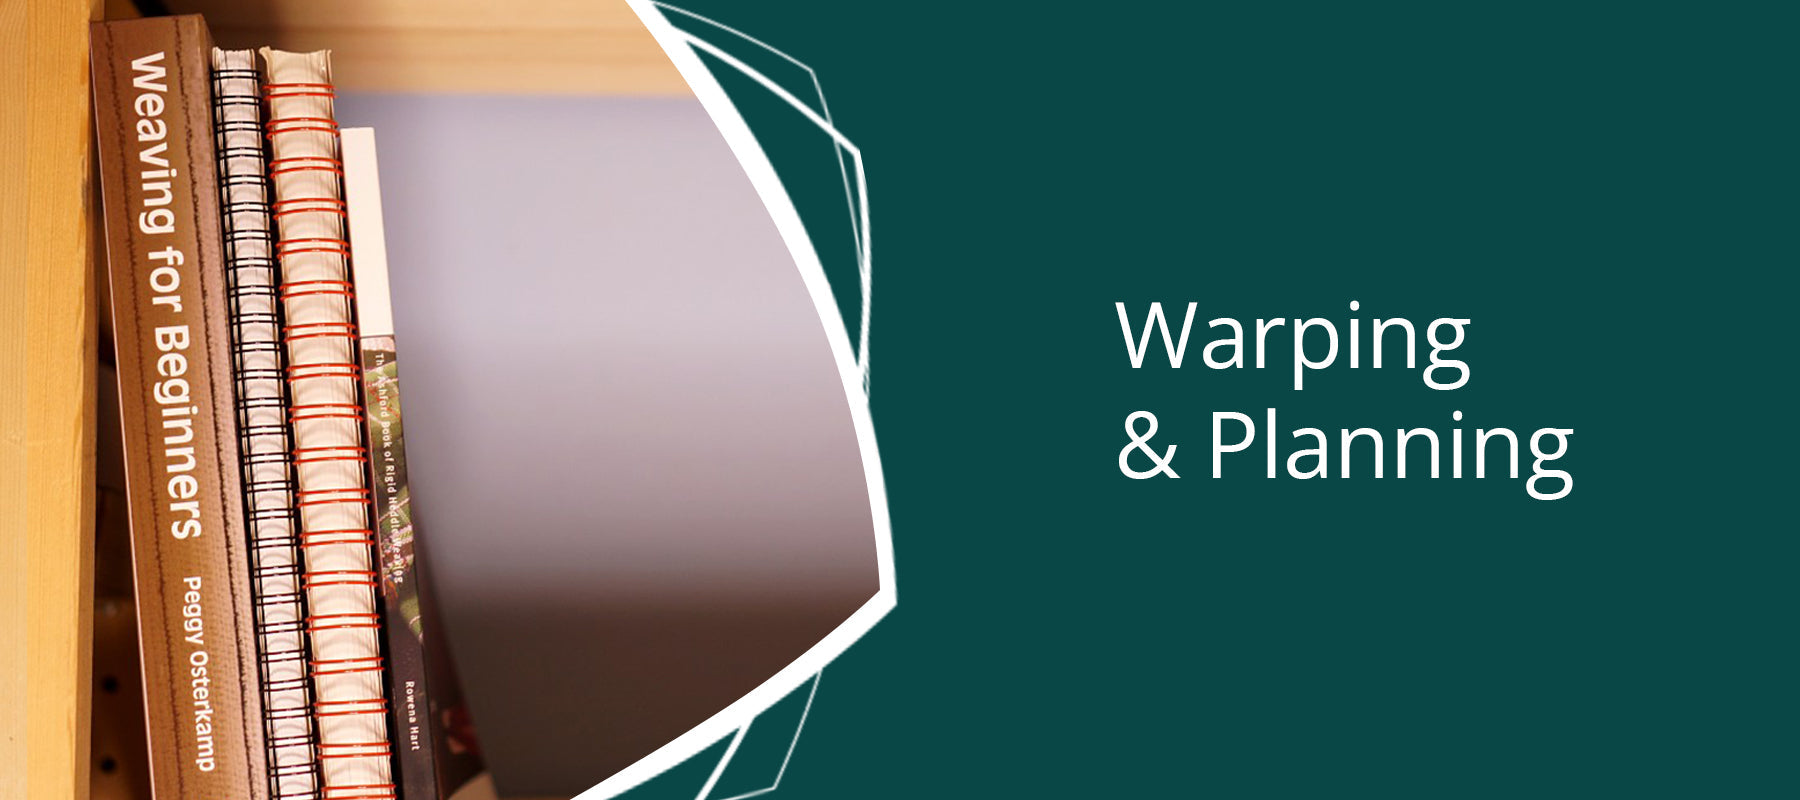 Warping & Planning Books - Thread Collective Australia